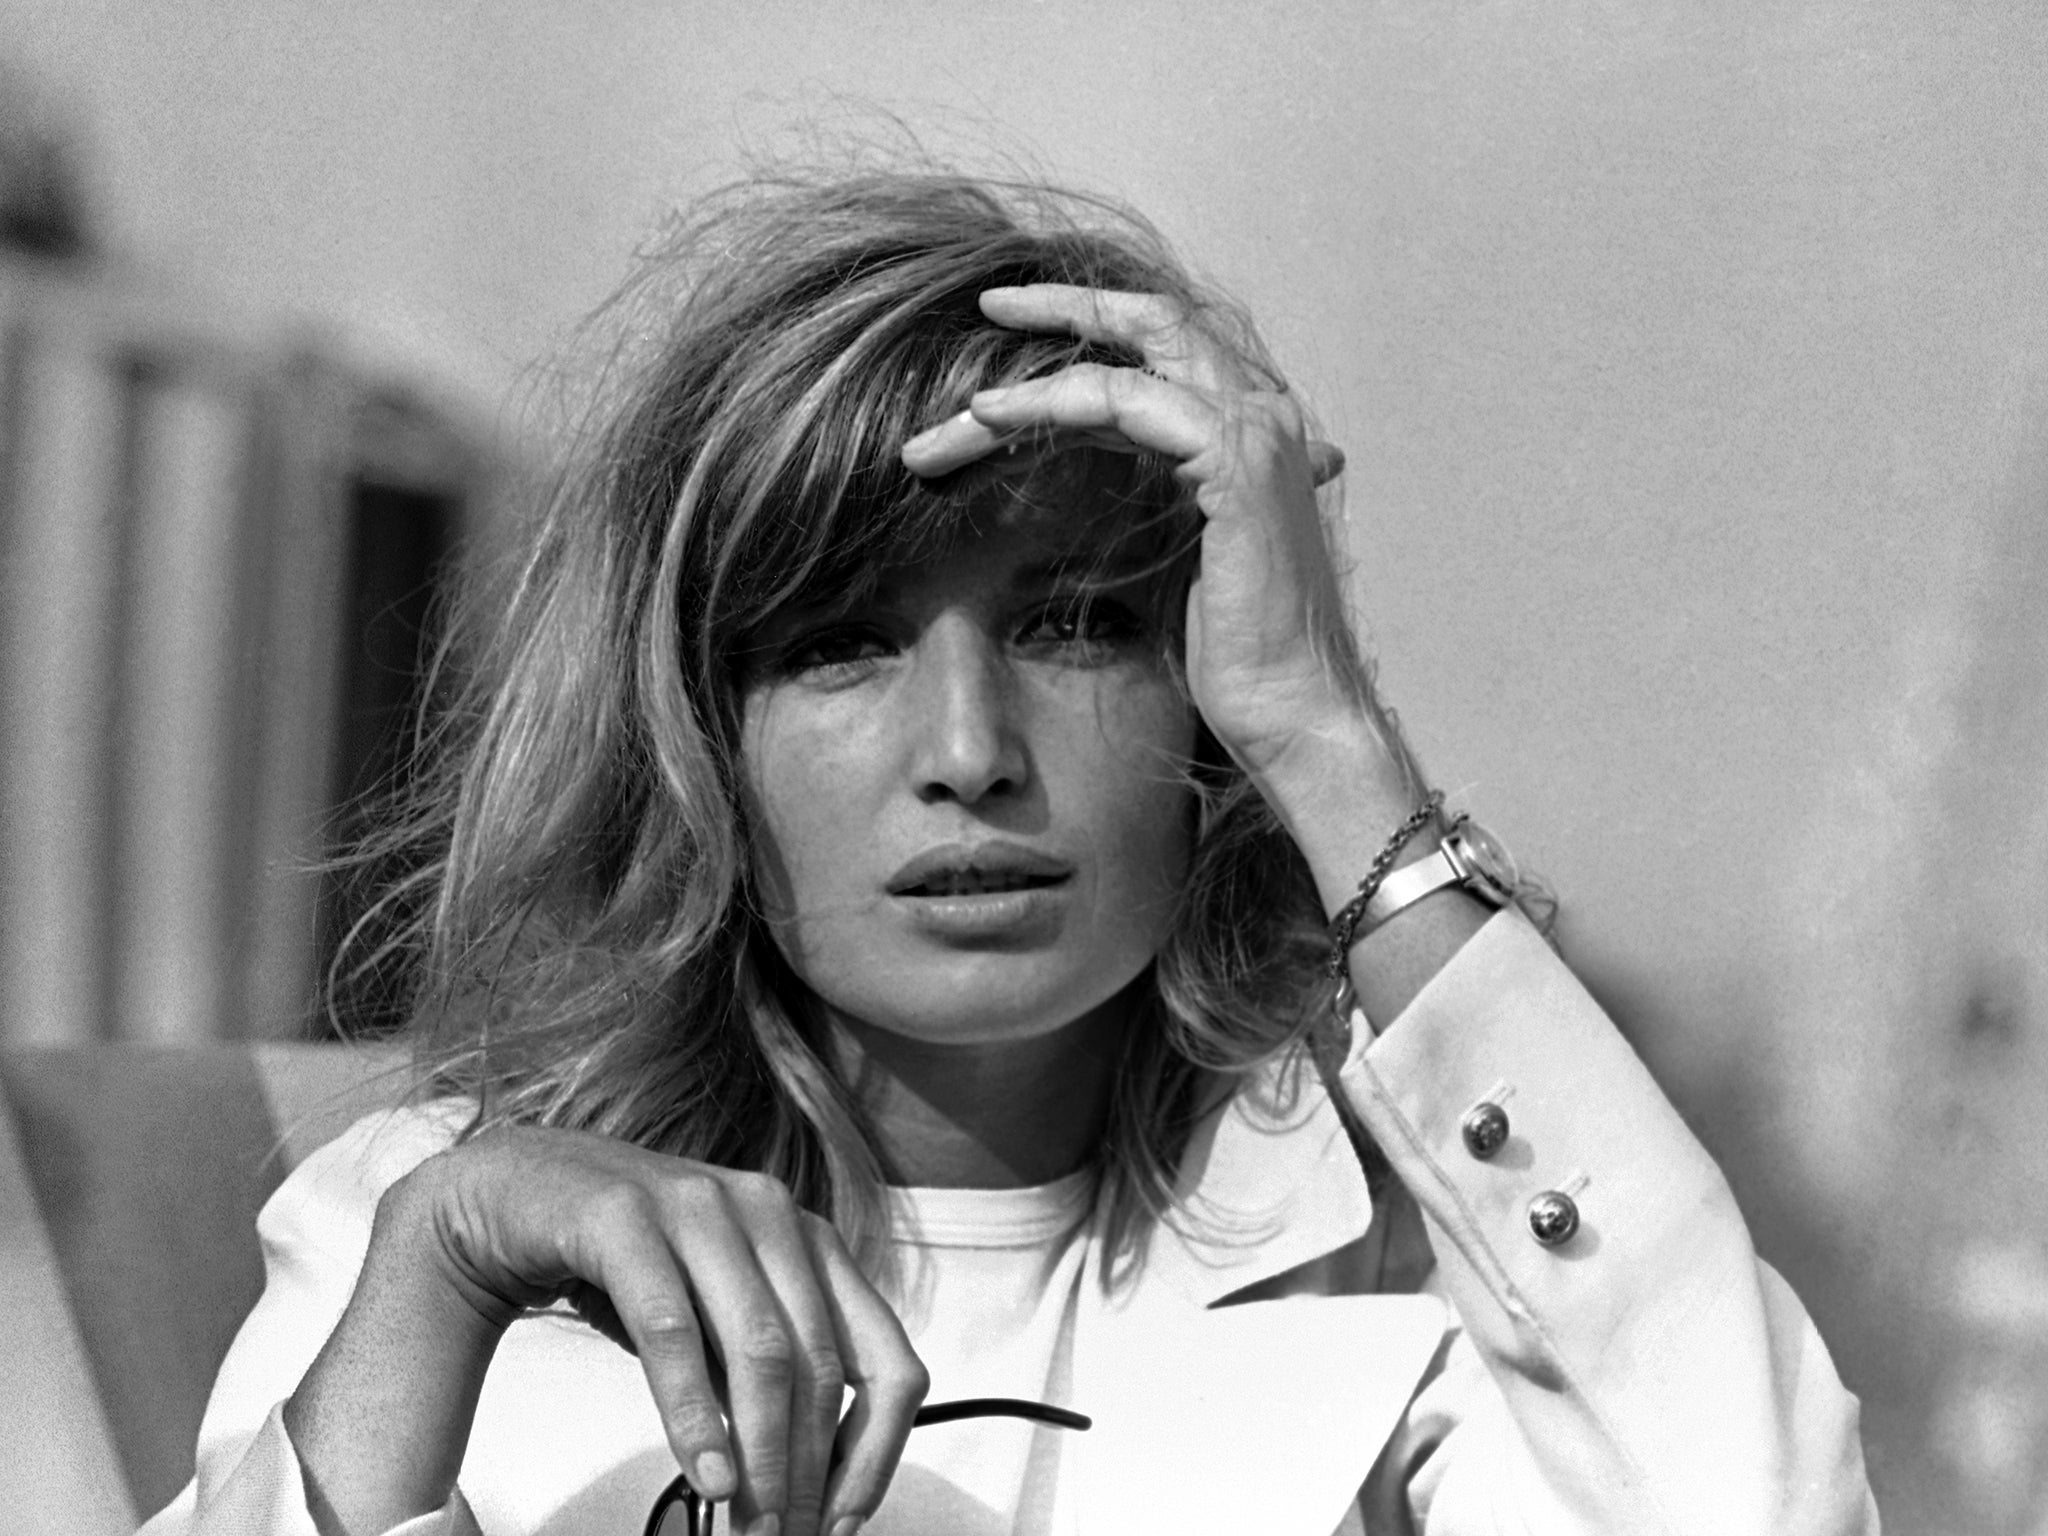 Vitti poses for a portrait at the Venice Film Festival in 1964